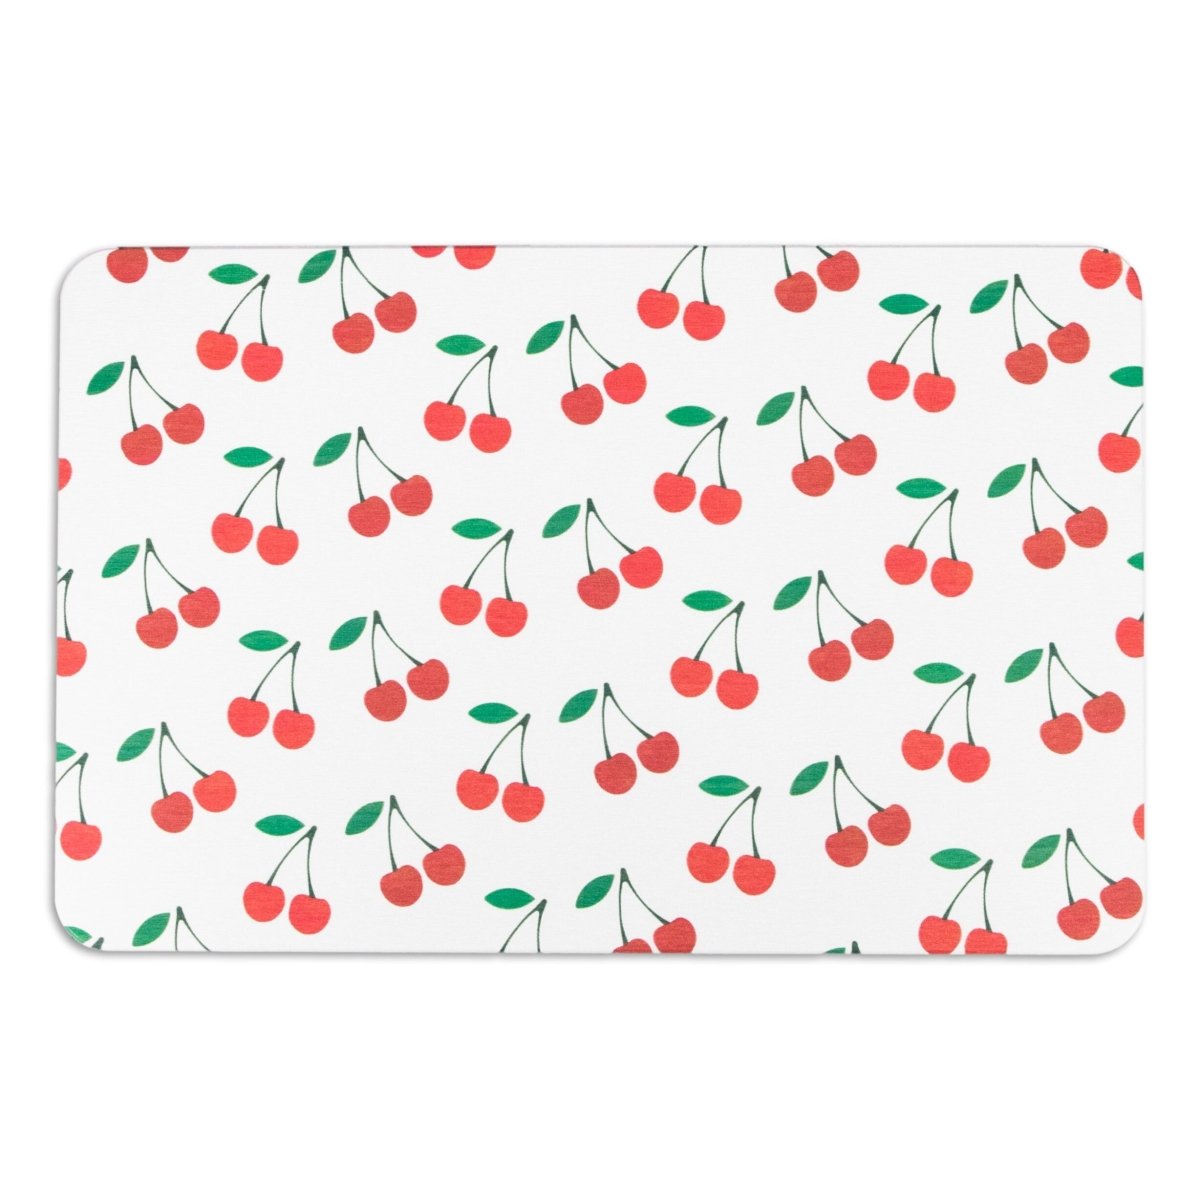 Red Cherries Bathmat - Cherry Blossom Bath Mat - Cute Bath Mat - Cherries Gift Bathroom Decor - Cherry Lover Gift - Stone Non Slip Bath Mat - Slips Away - 1330559958 -